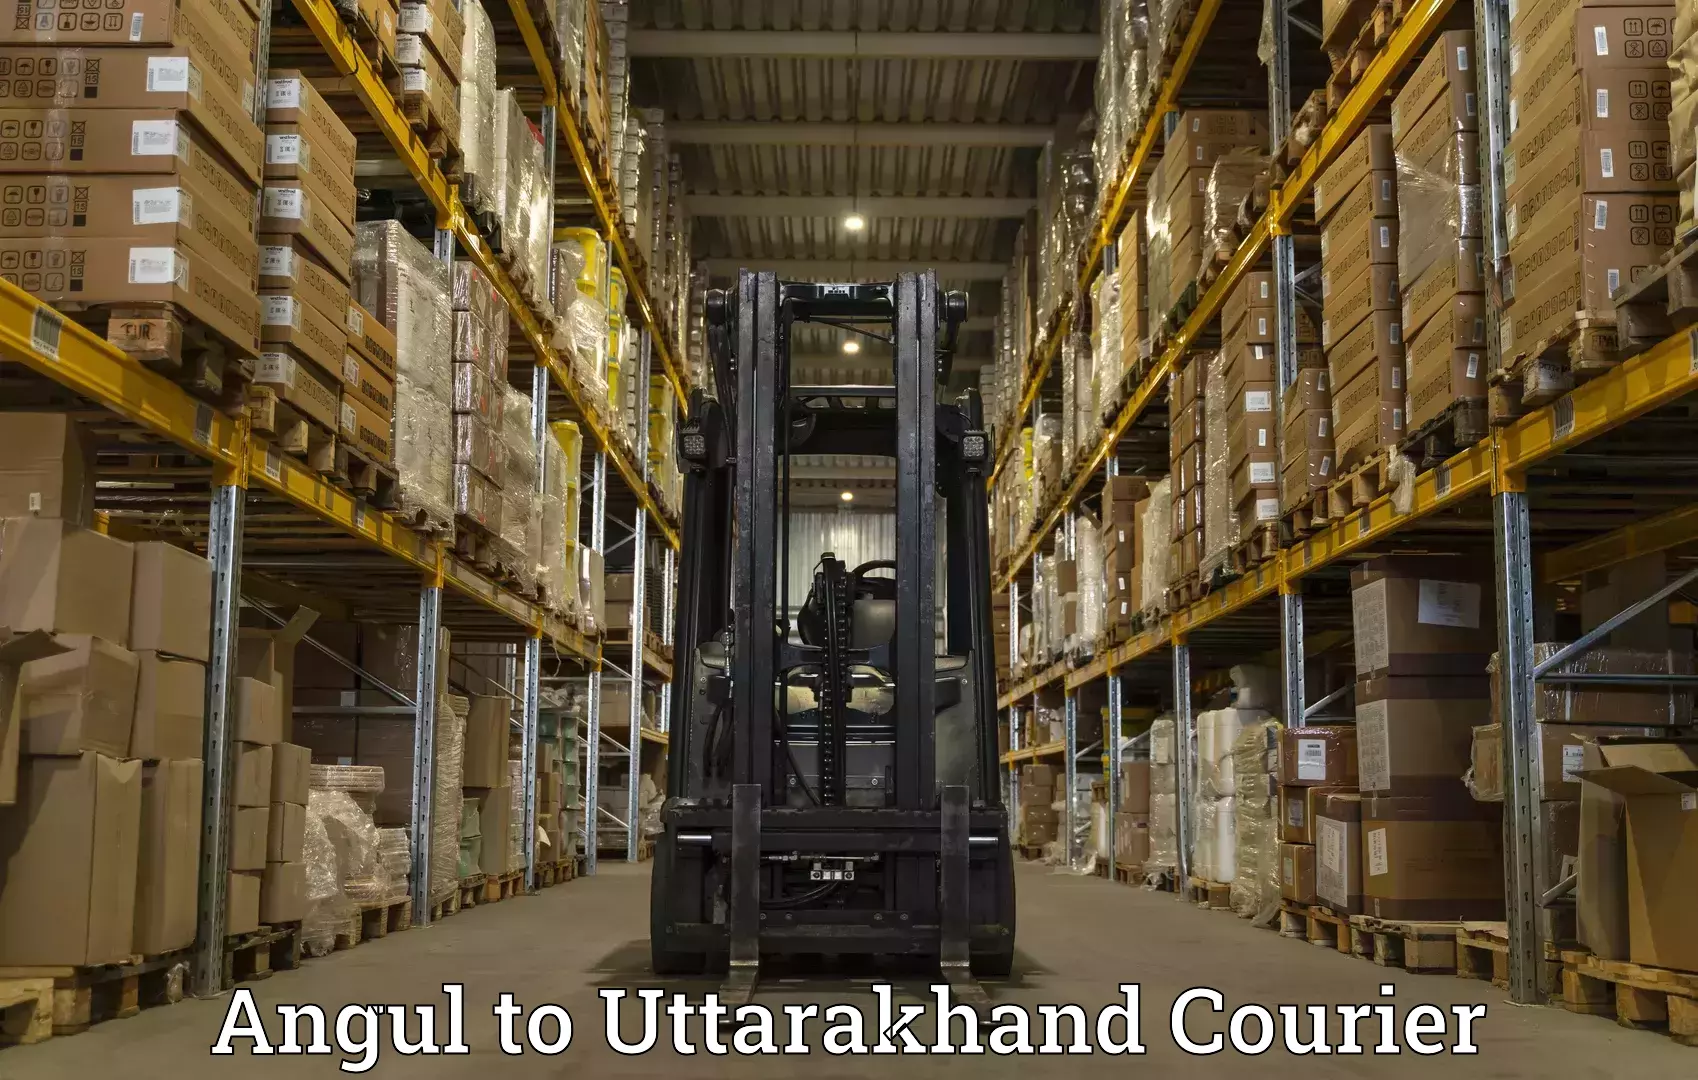 Courier service comparison Angul to Ramnagar